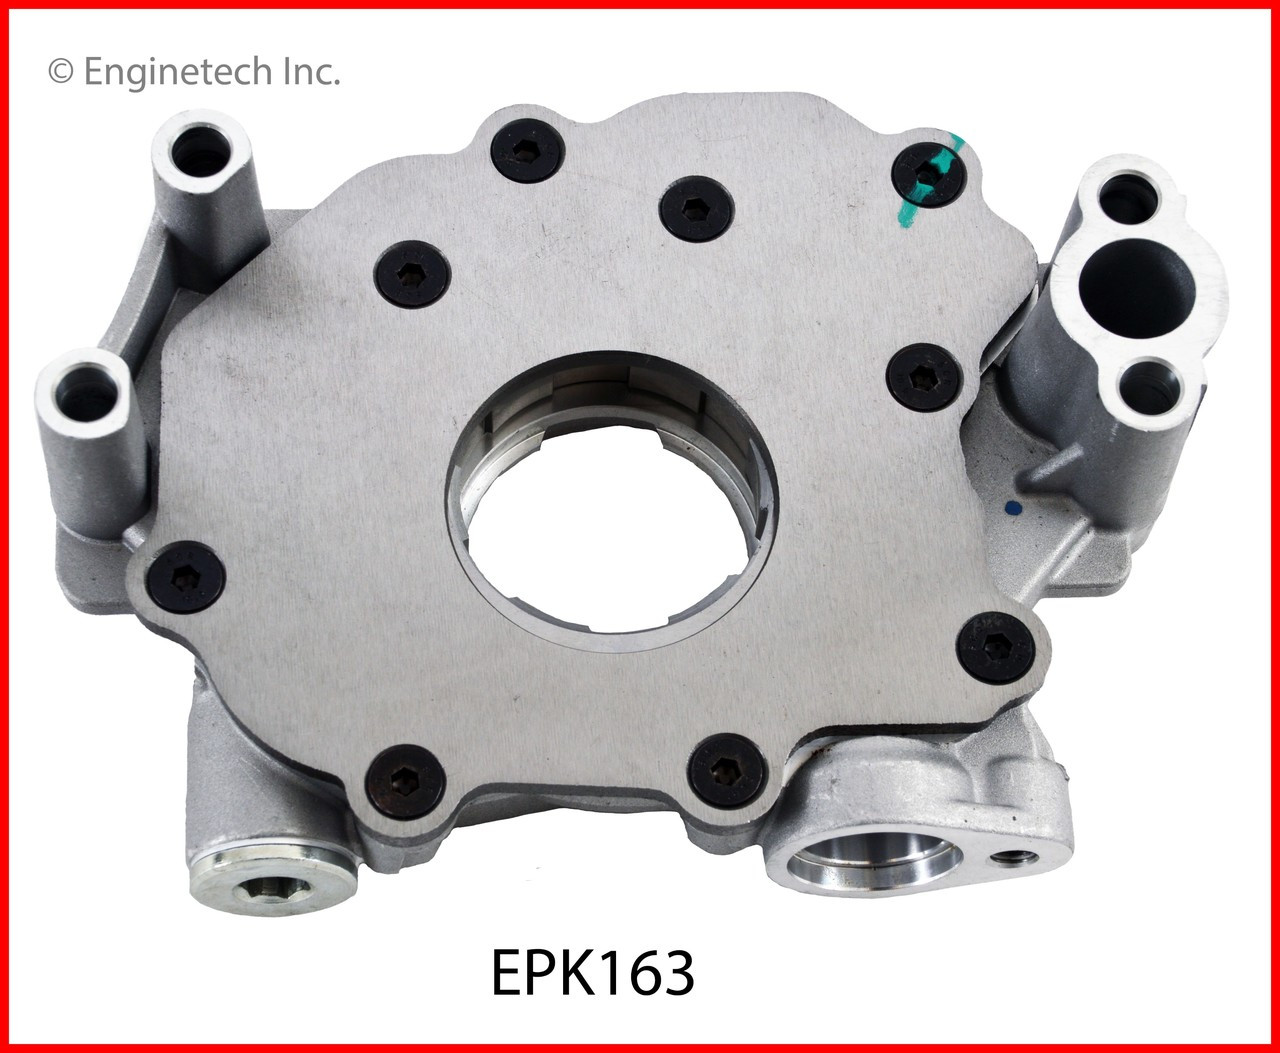 Oil Pump - 2014 Ram 2500 5.7L (EPK163.H73)